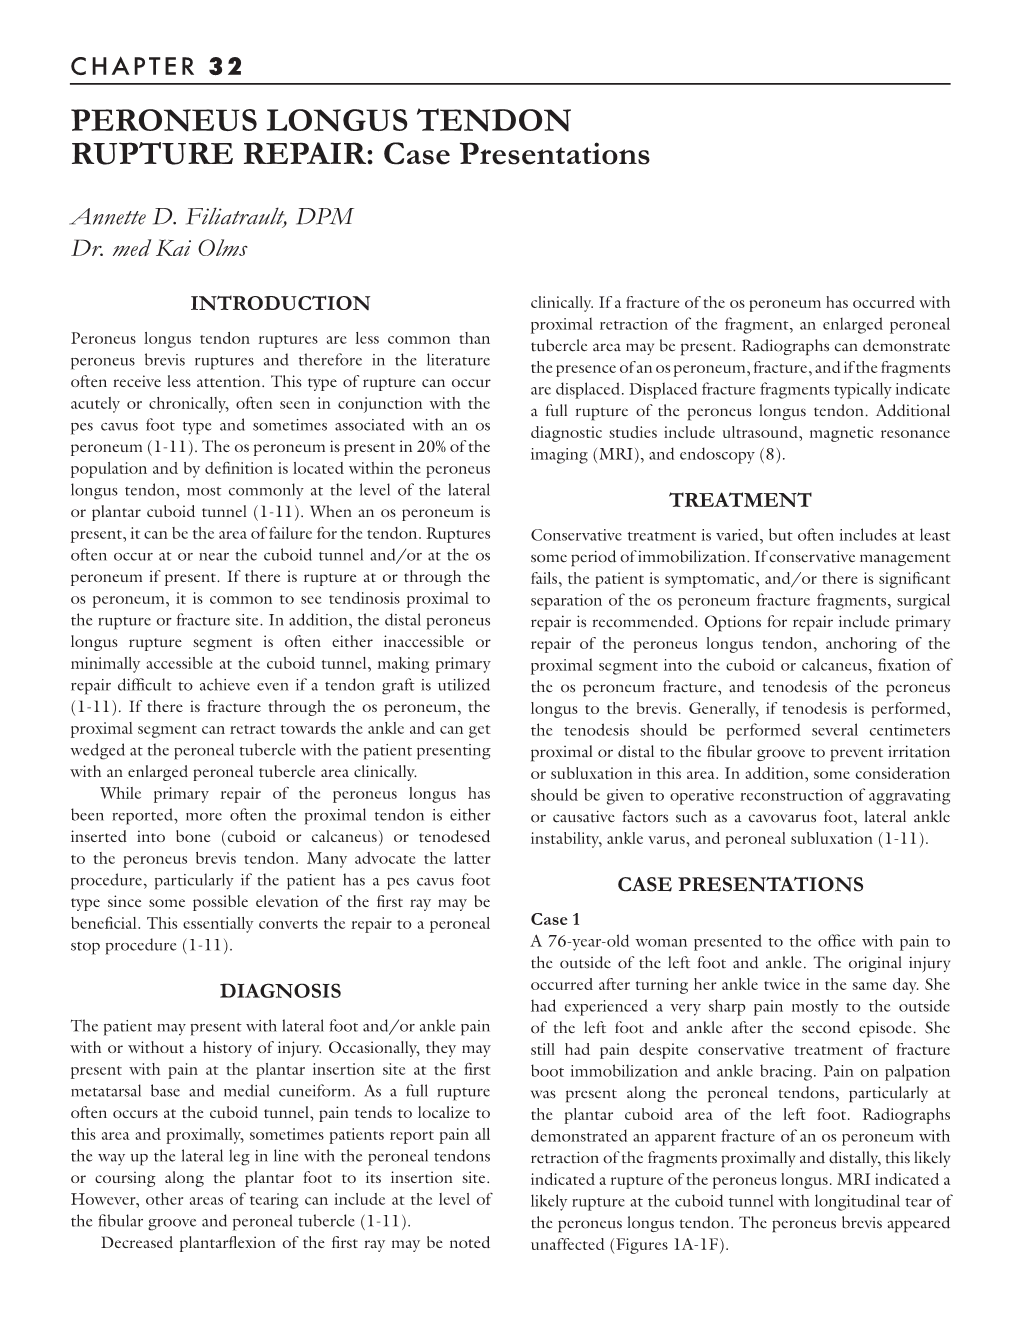 PERONEUS LONGUS TENDON RUPTURE REPAIR: Case Presentations